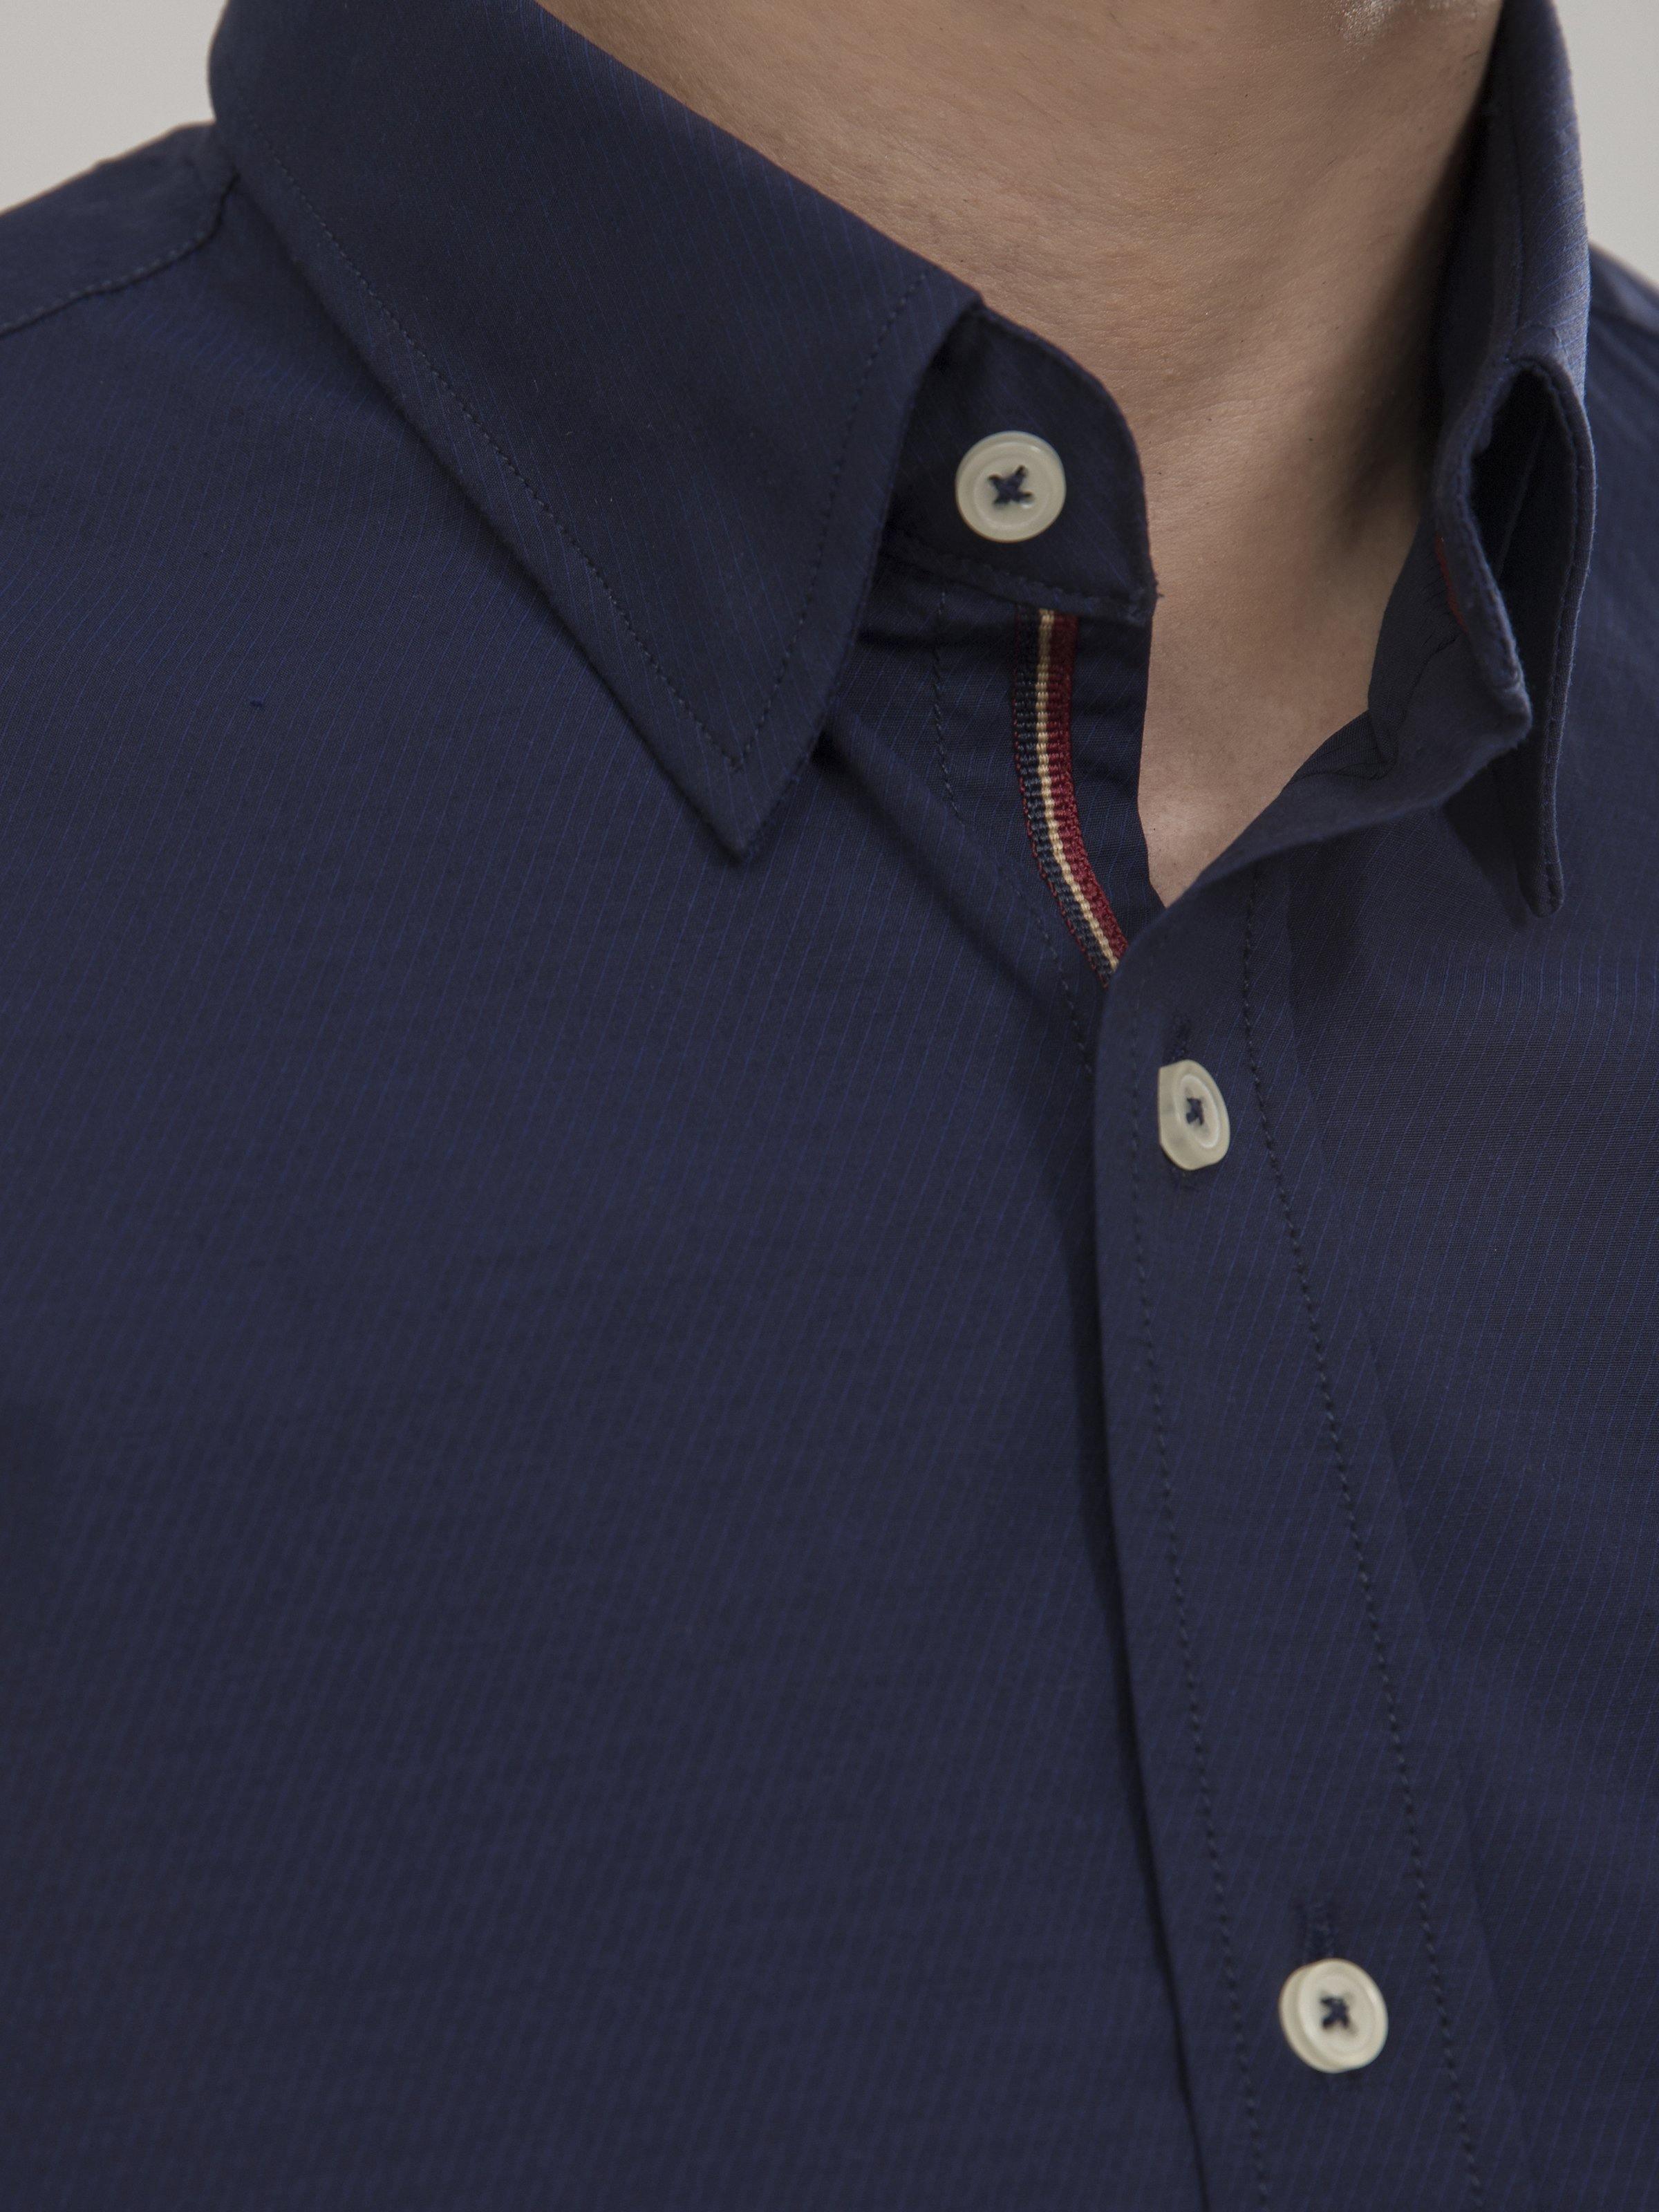 SMART SHIRT FULL SLEEVE NAVY BLUE at Charcoal Clothing